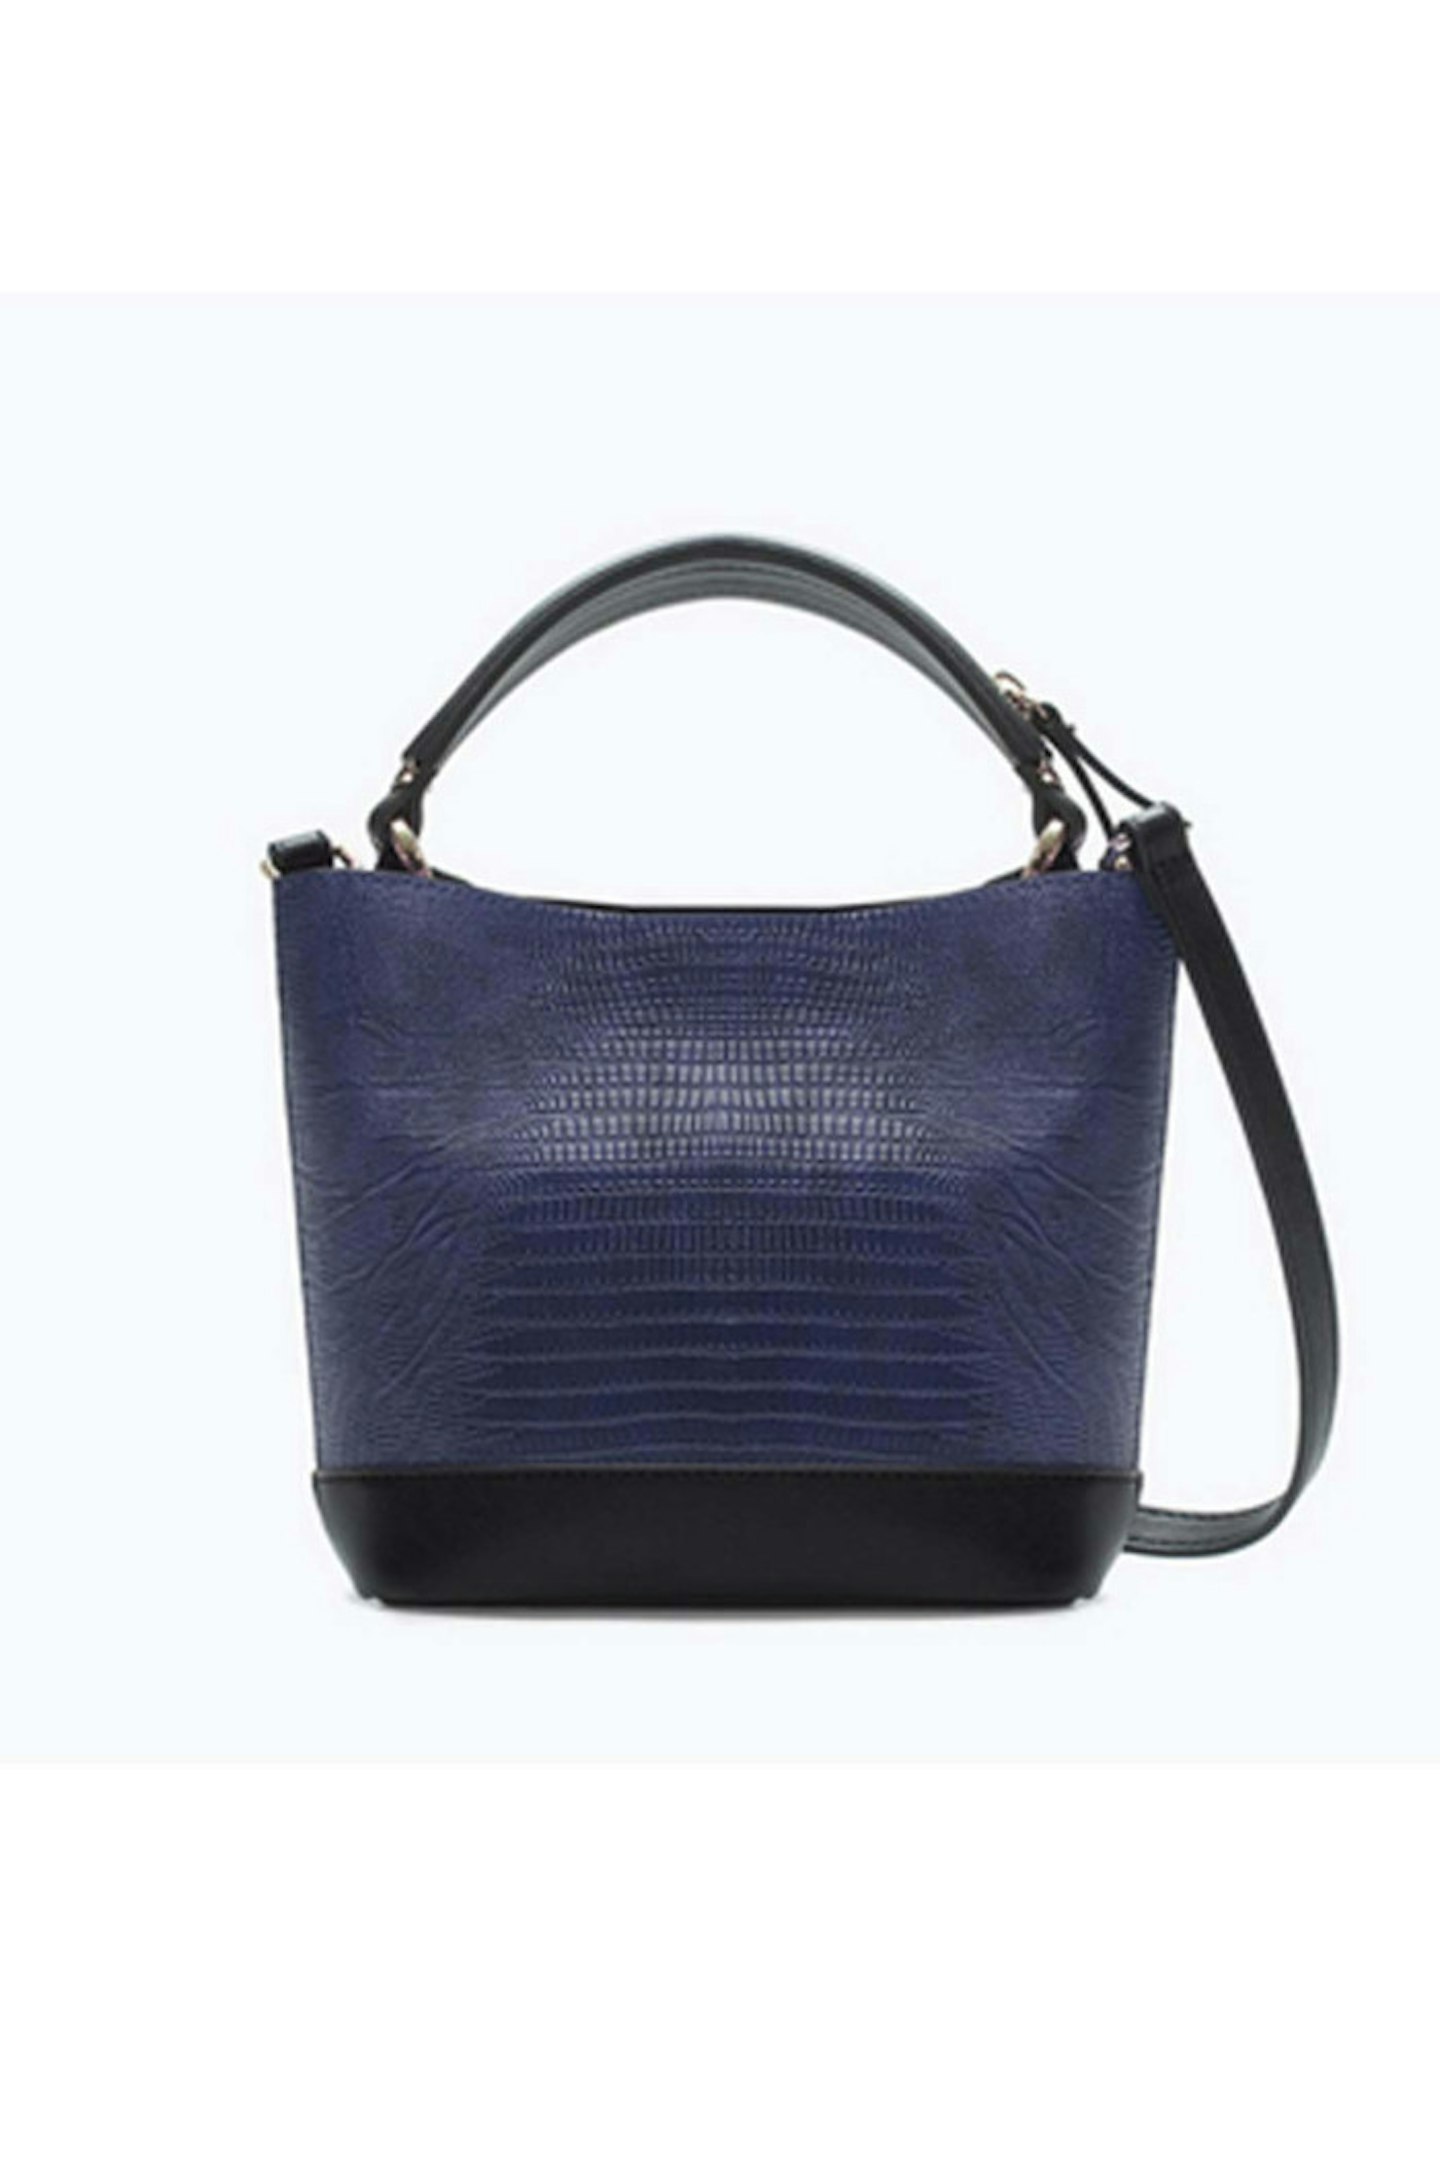 16. Textured leather mini shopper bag, £39.99, Zara